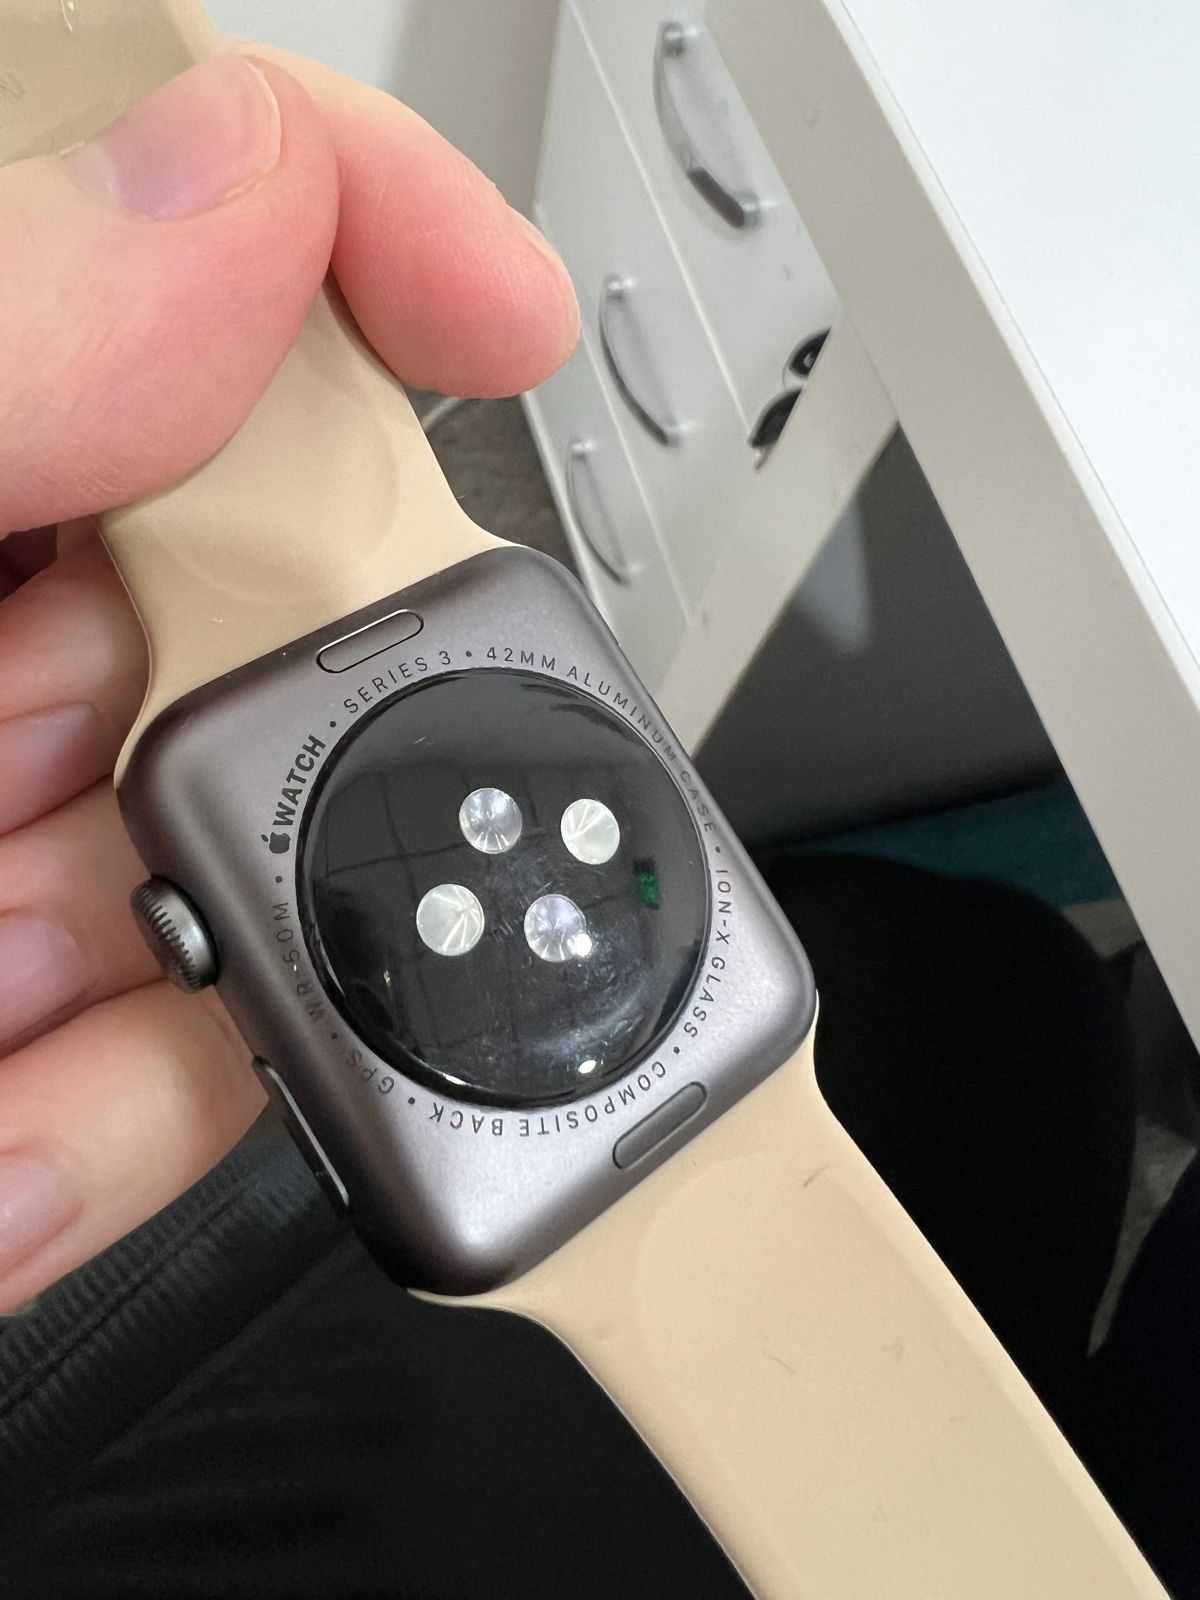 Apple Watch Series 3, 42 mm